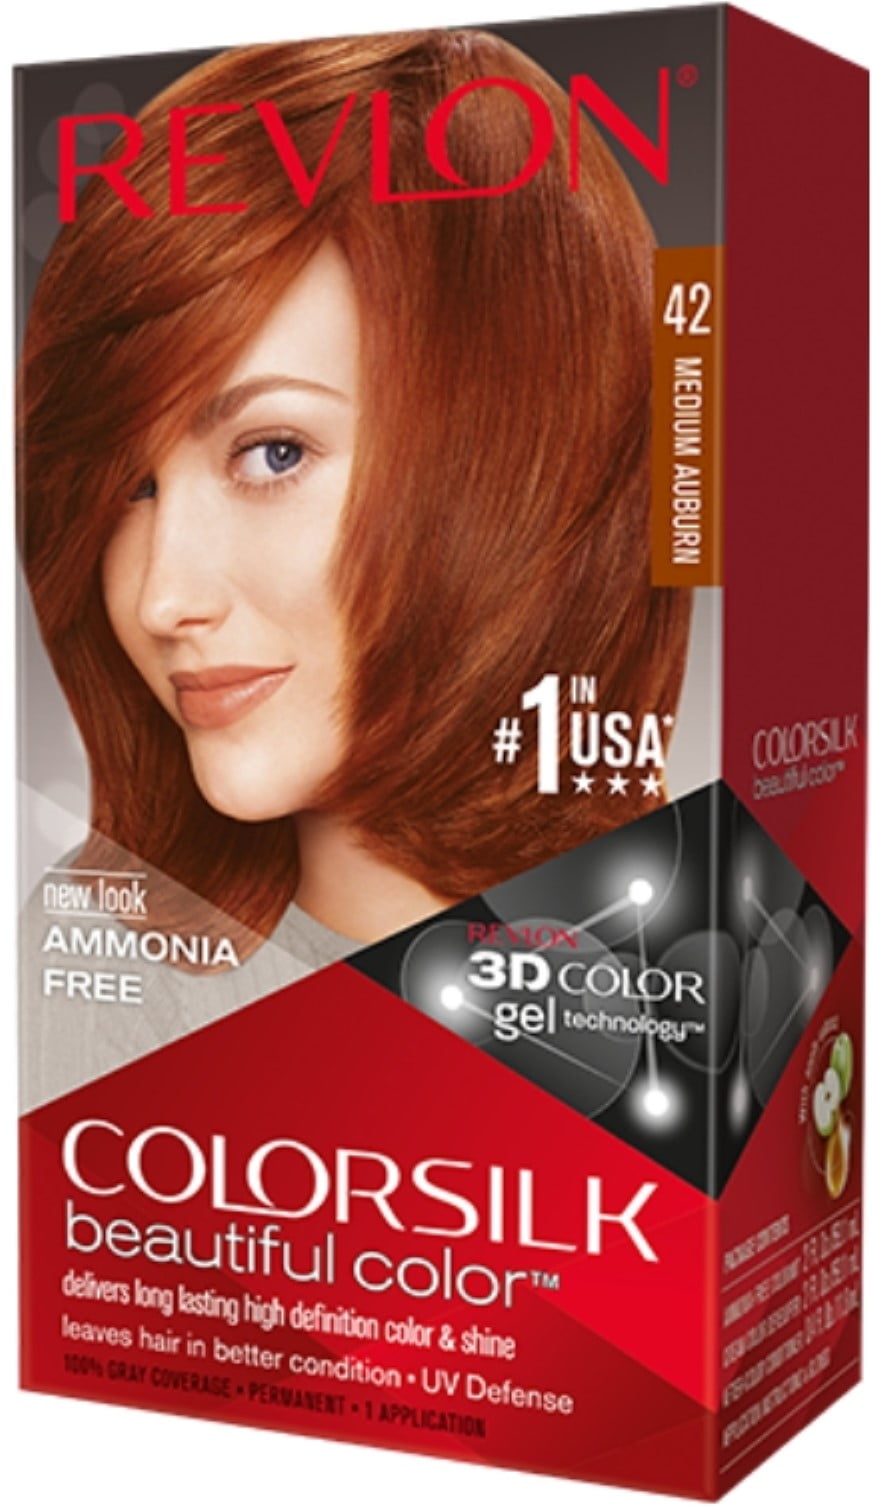 Revlon ColorSilk Hair Color, 42 Medium Auburn 1 Each